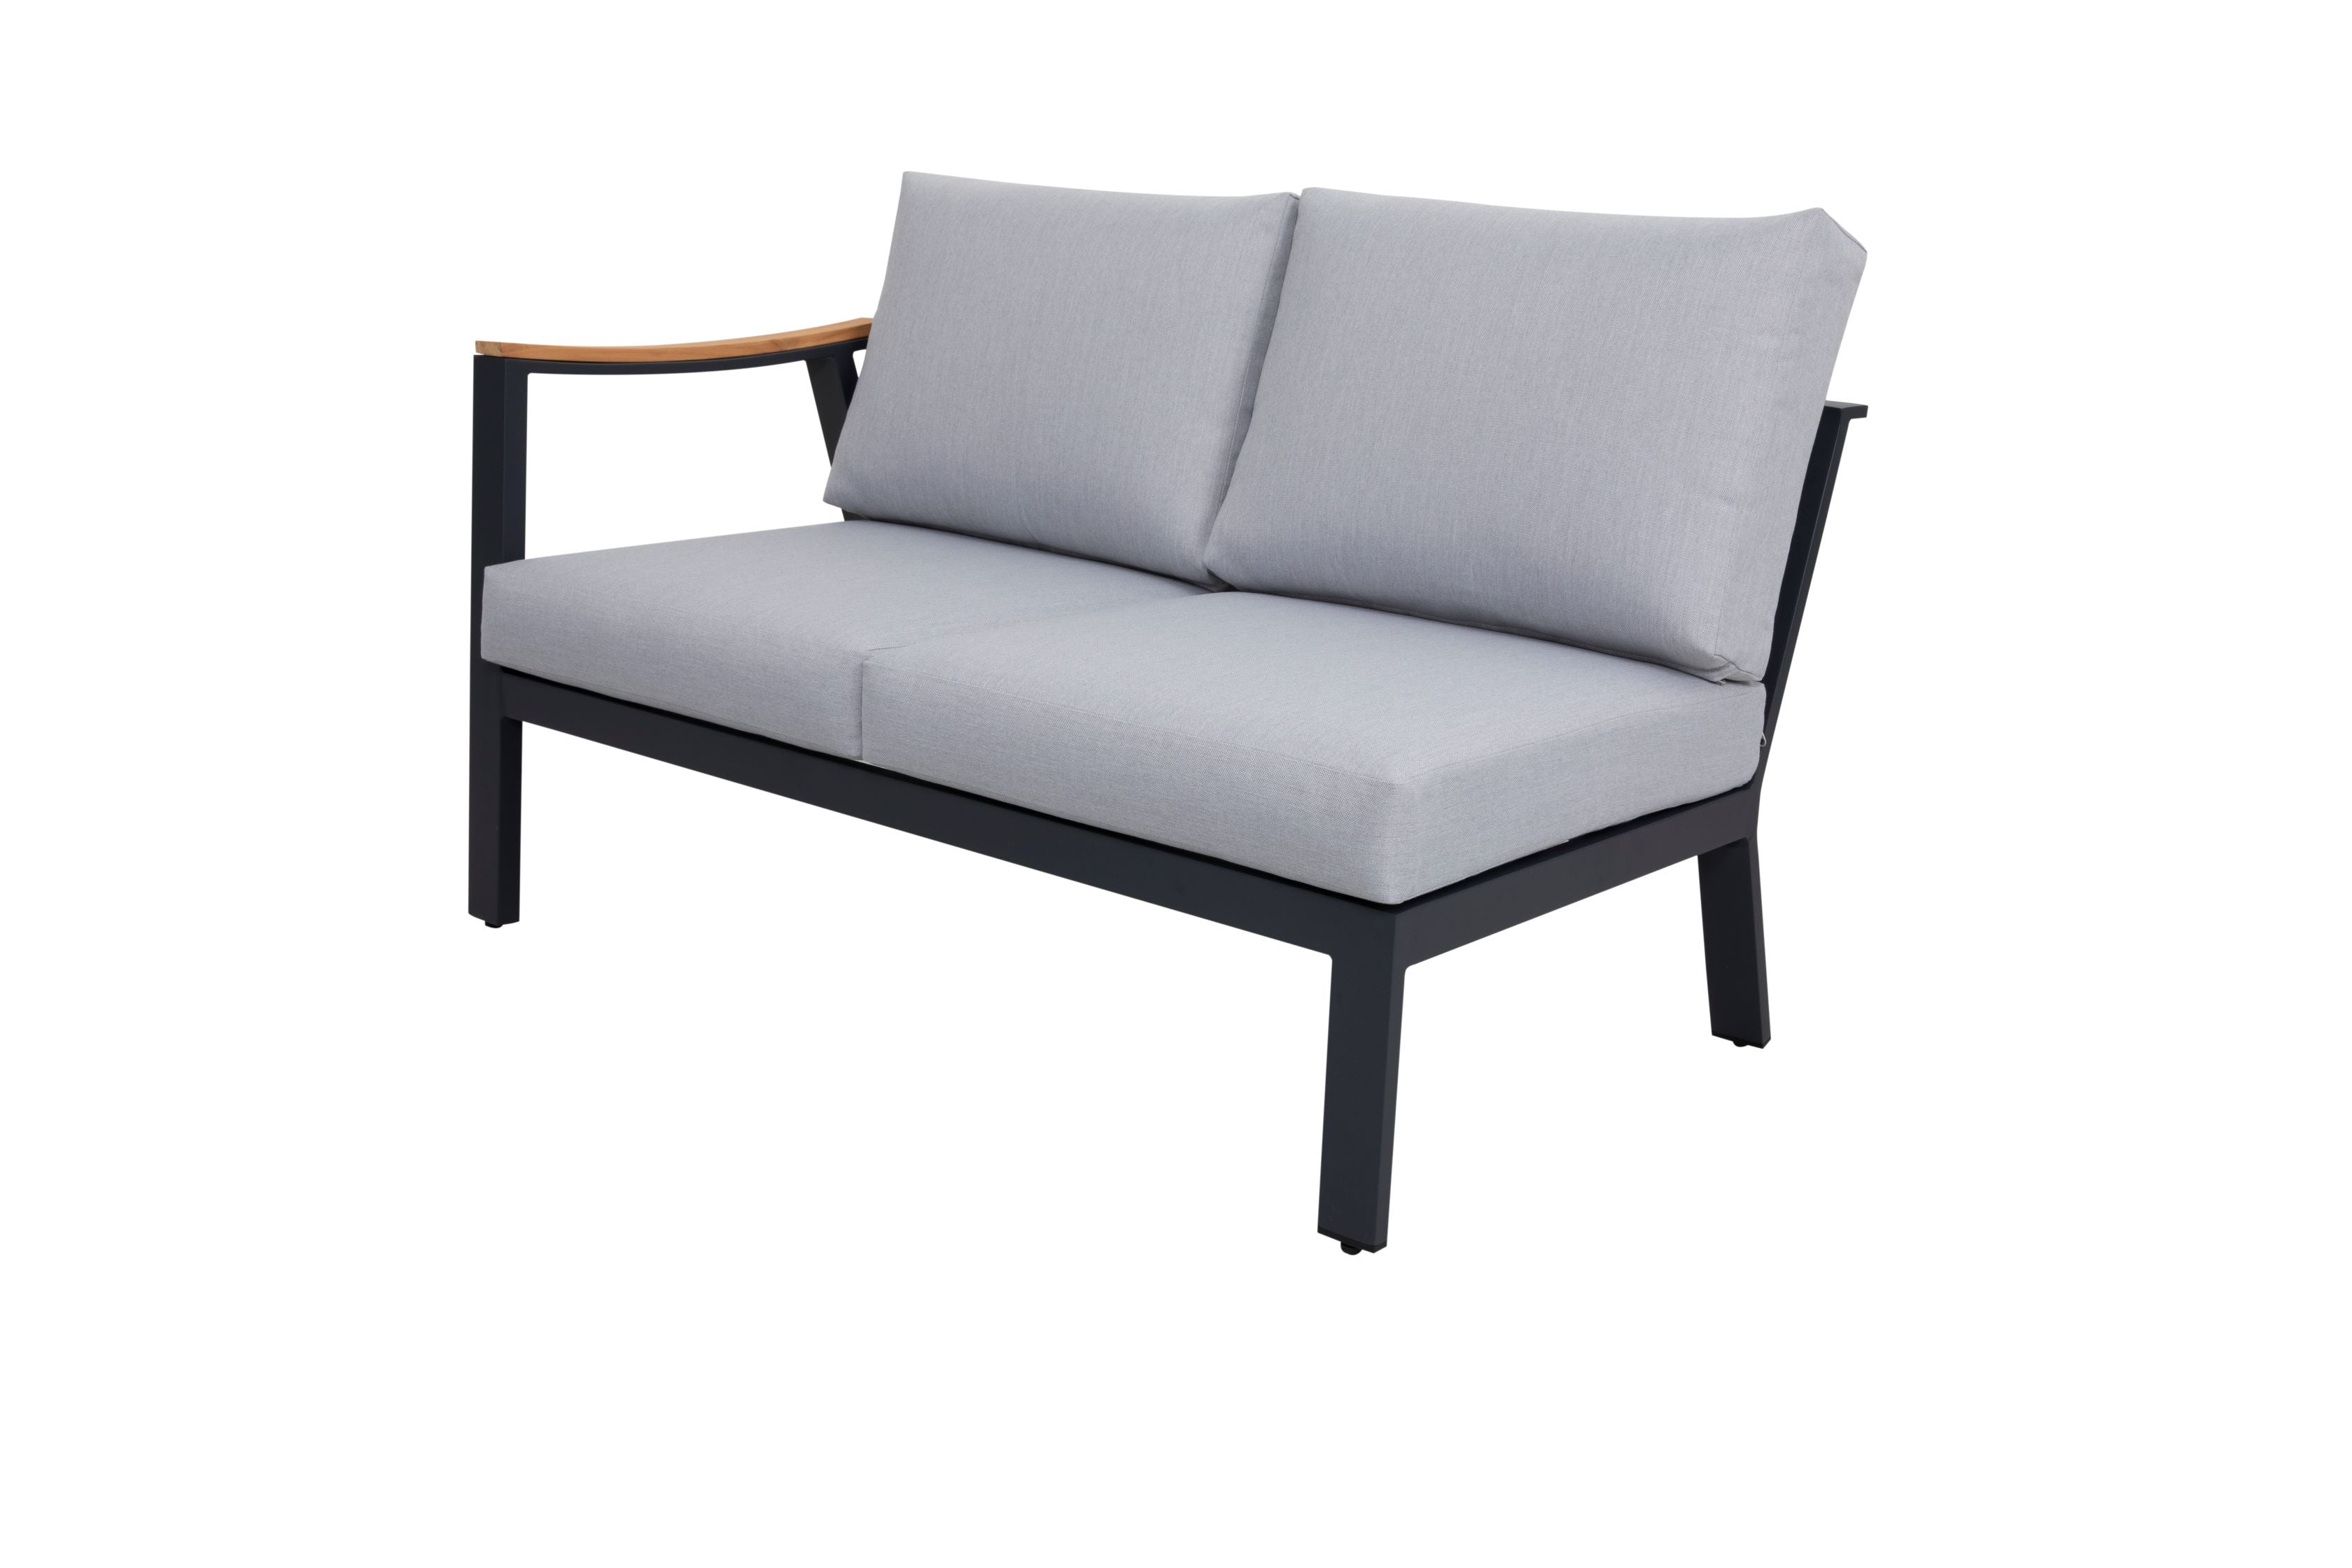 Patio Time Nova 4-Piece Aluminum & Teak Sectional Sofa Set